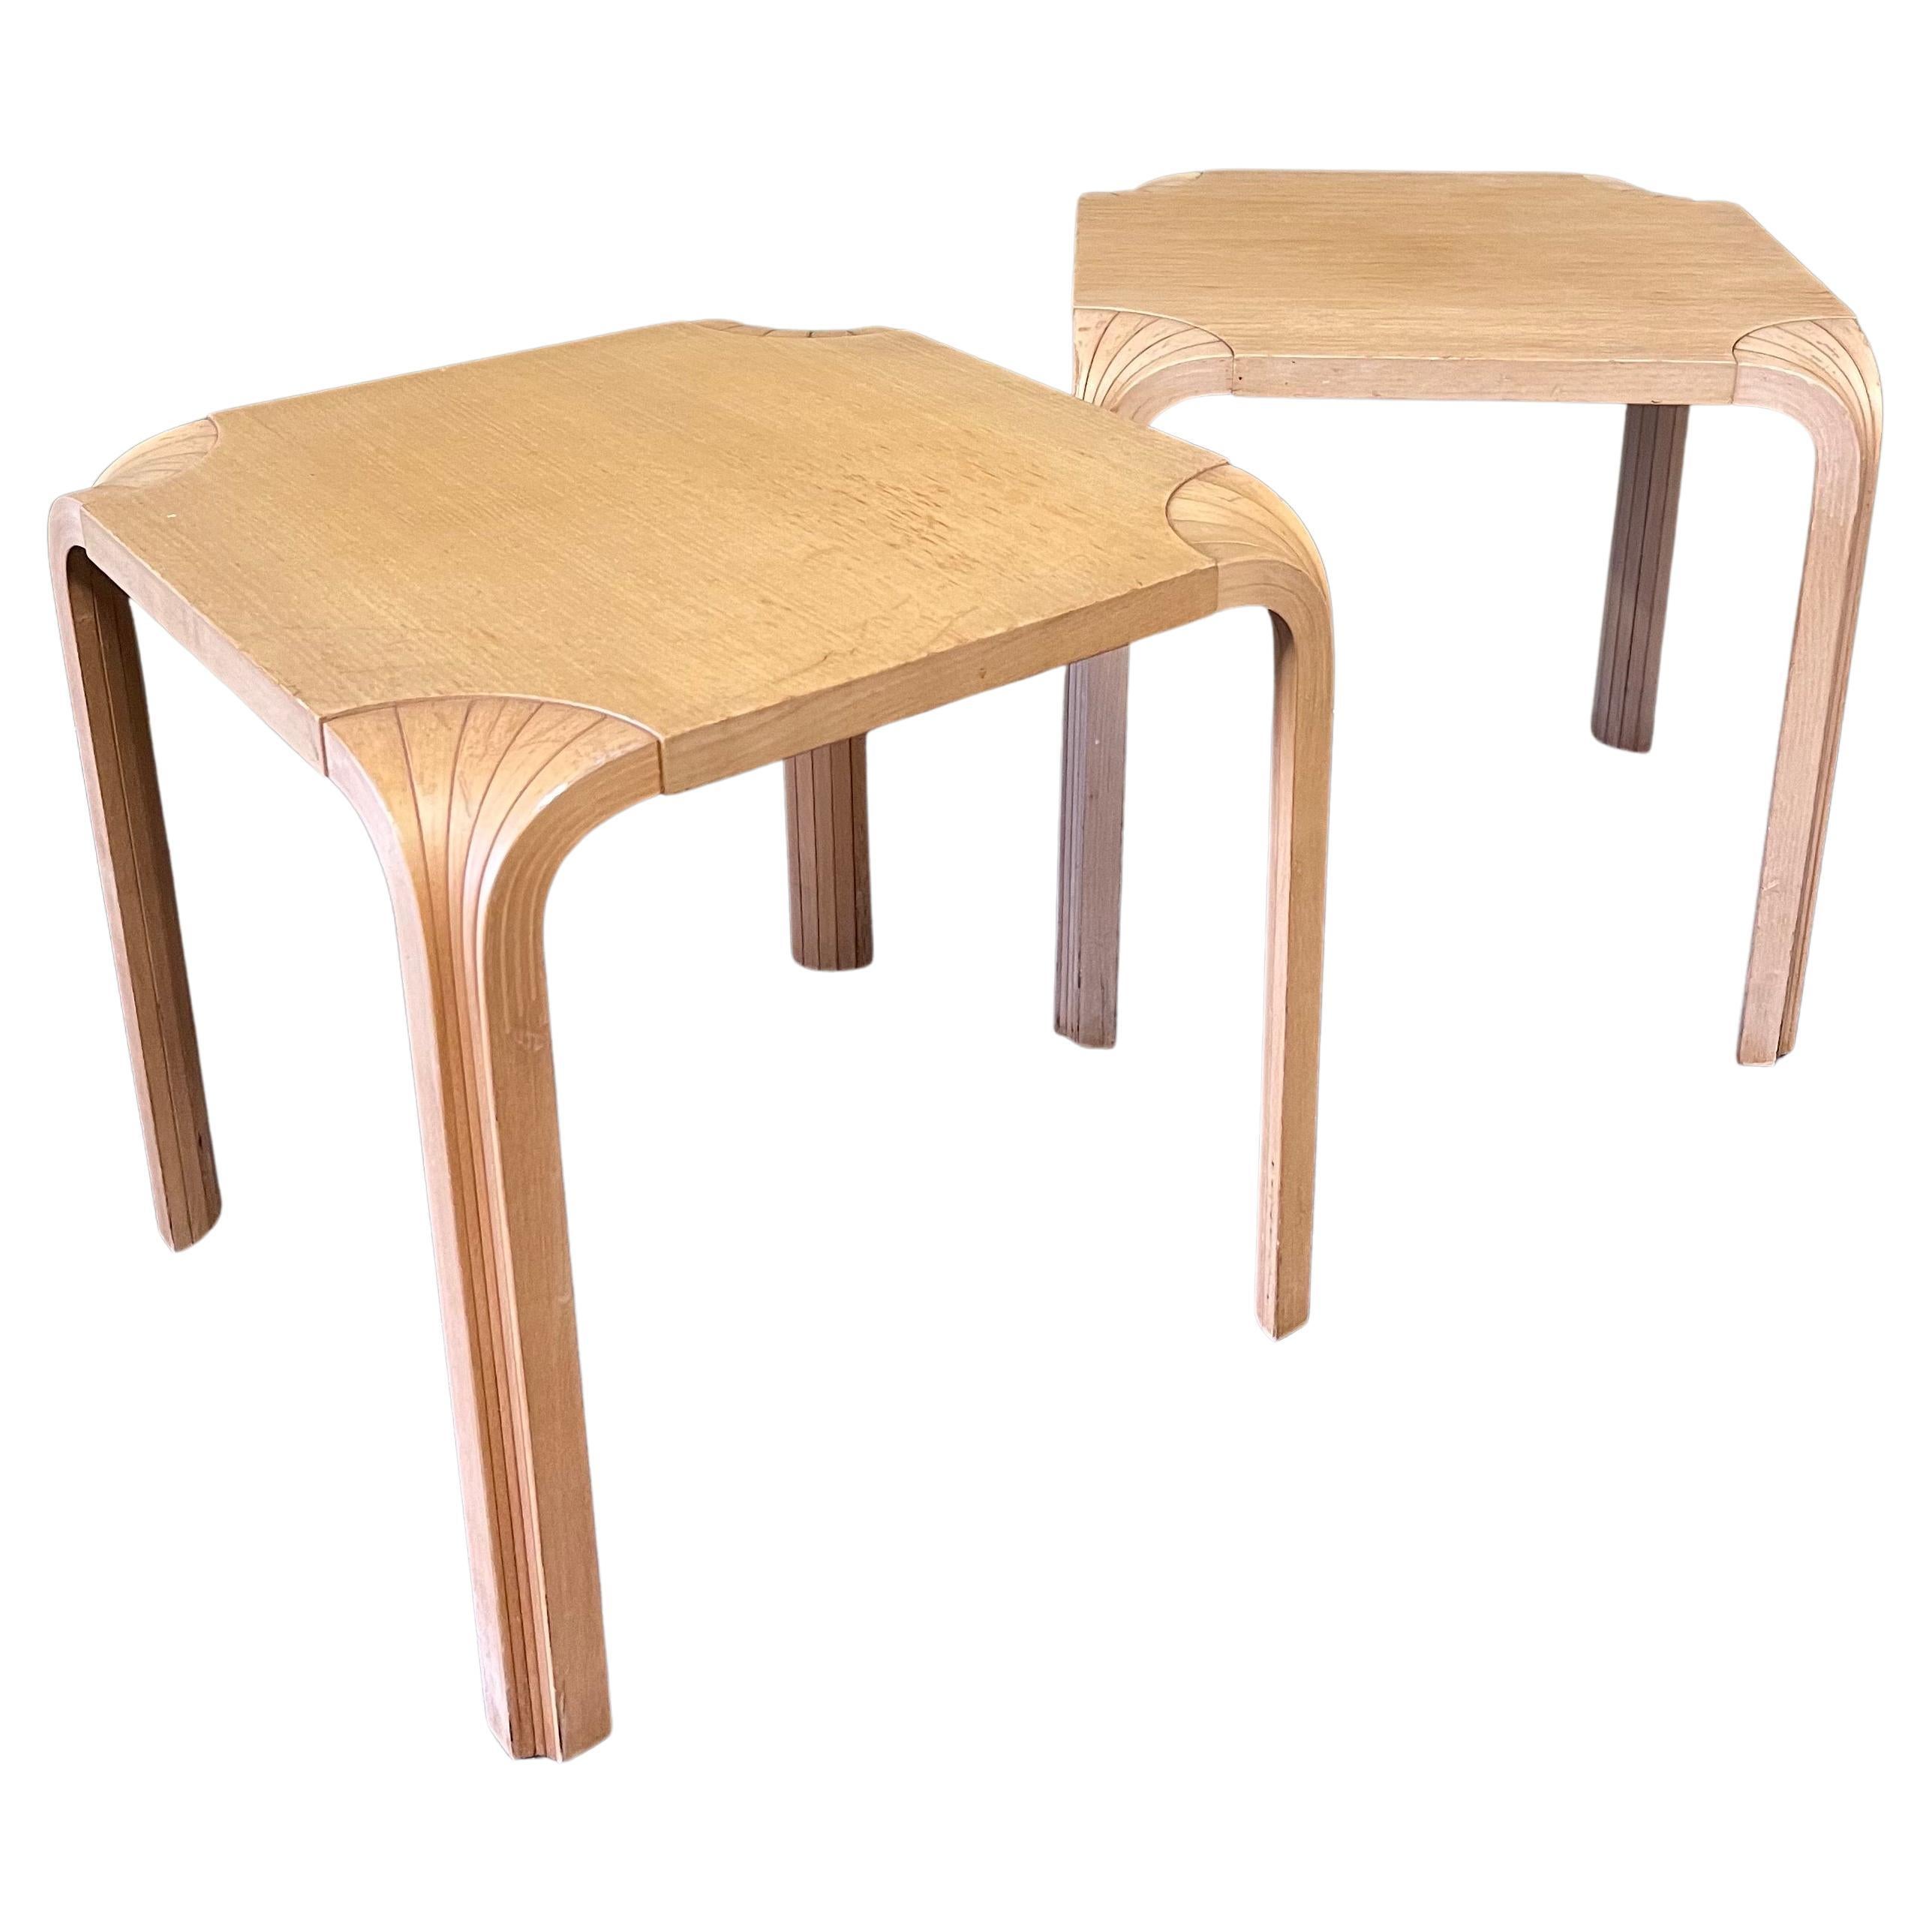 Pair of Vintage Fan Leg Side Tables / Stools by Alvar Aalto Designs for Artek